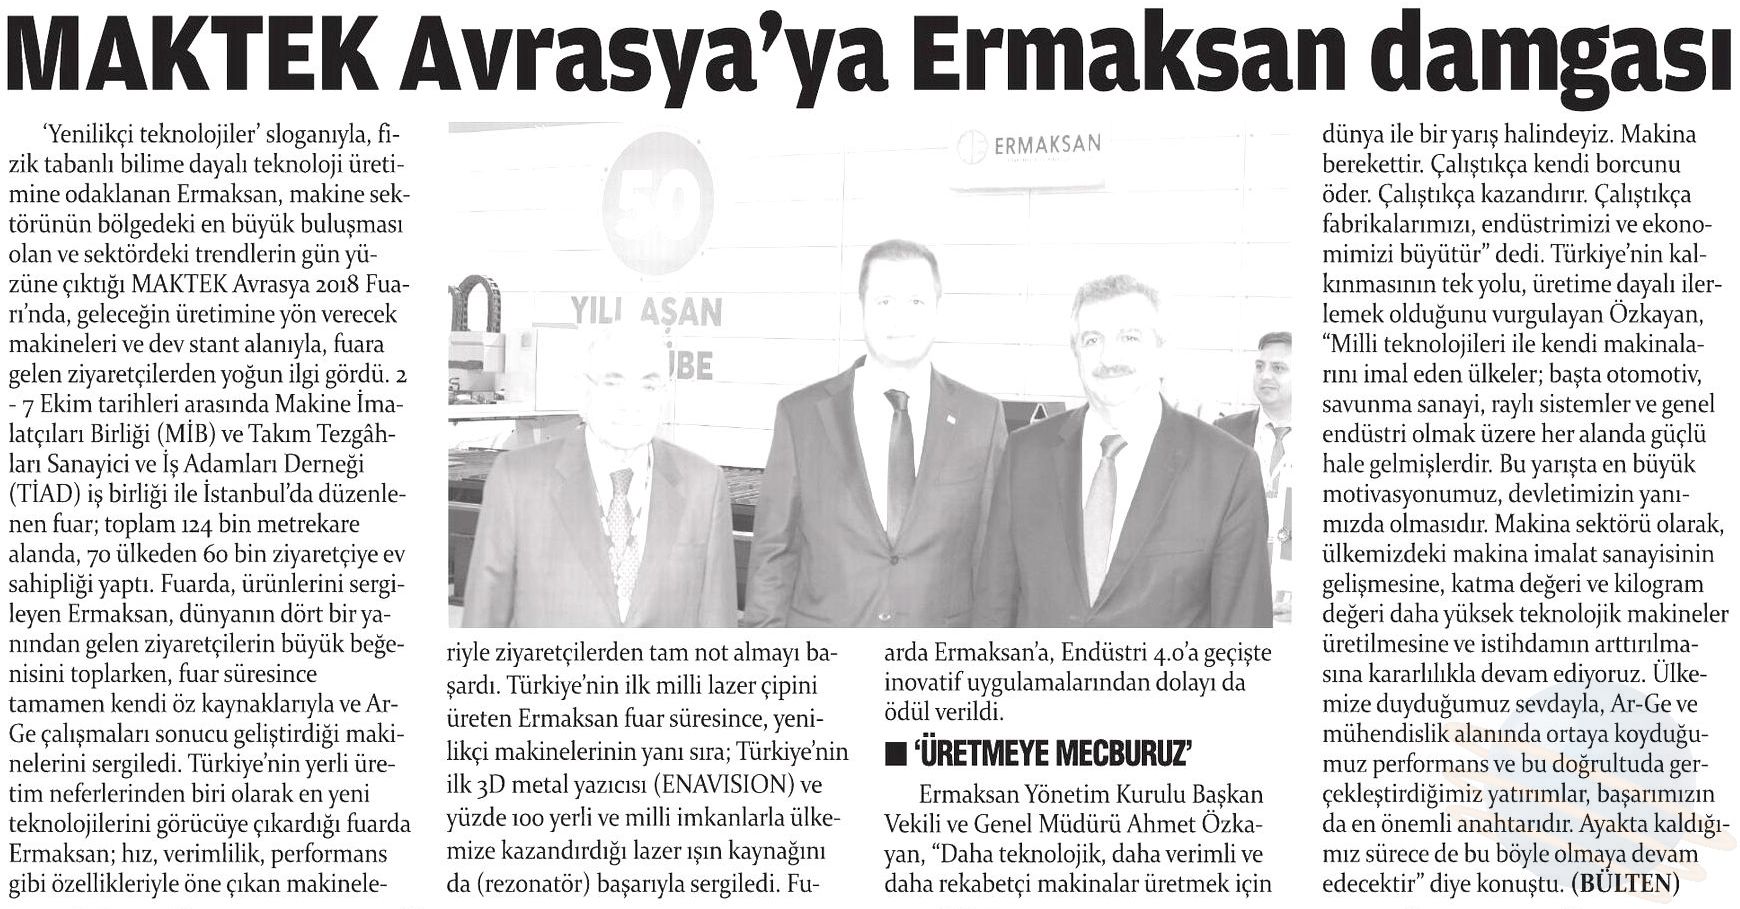 Gazete Bursa